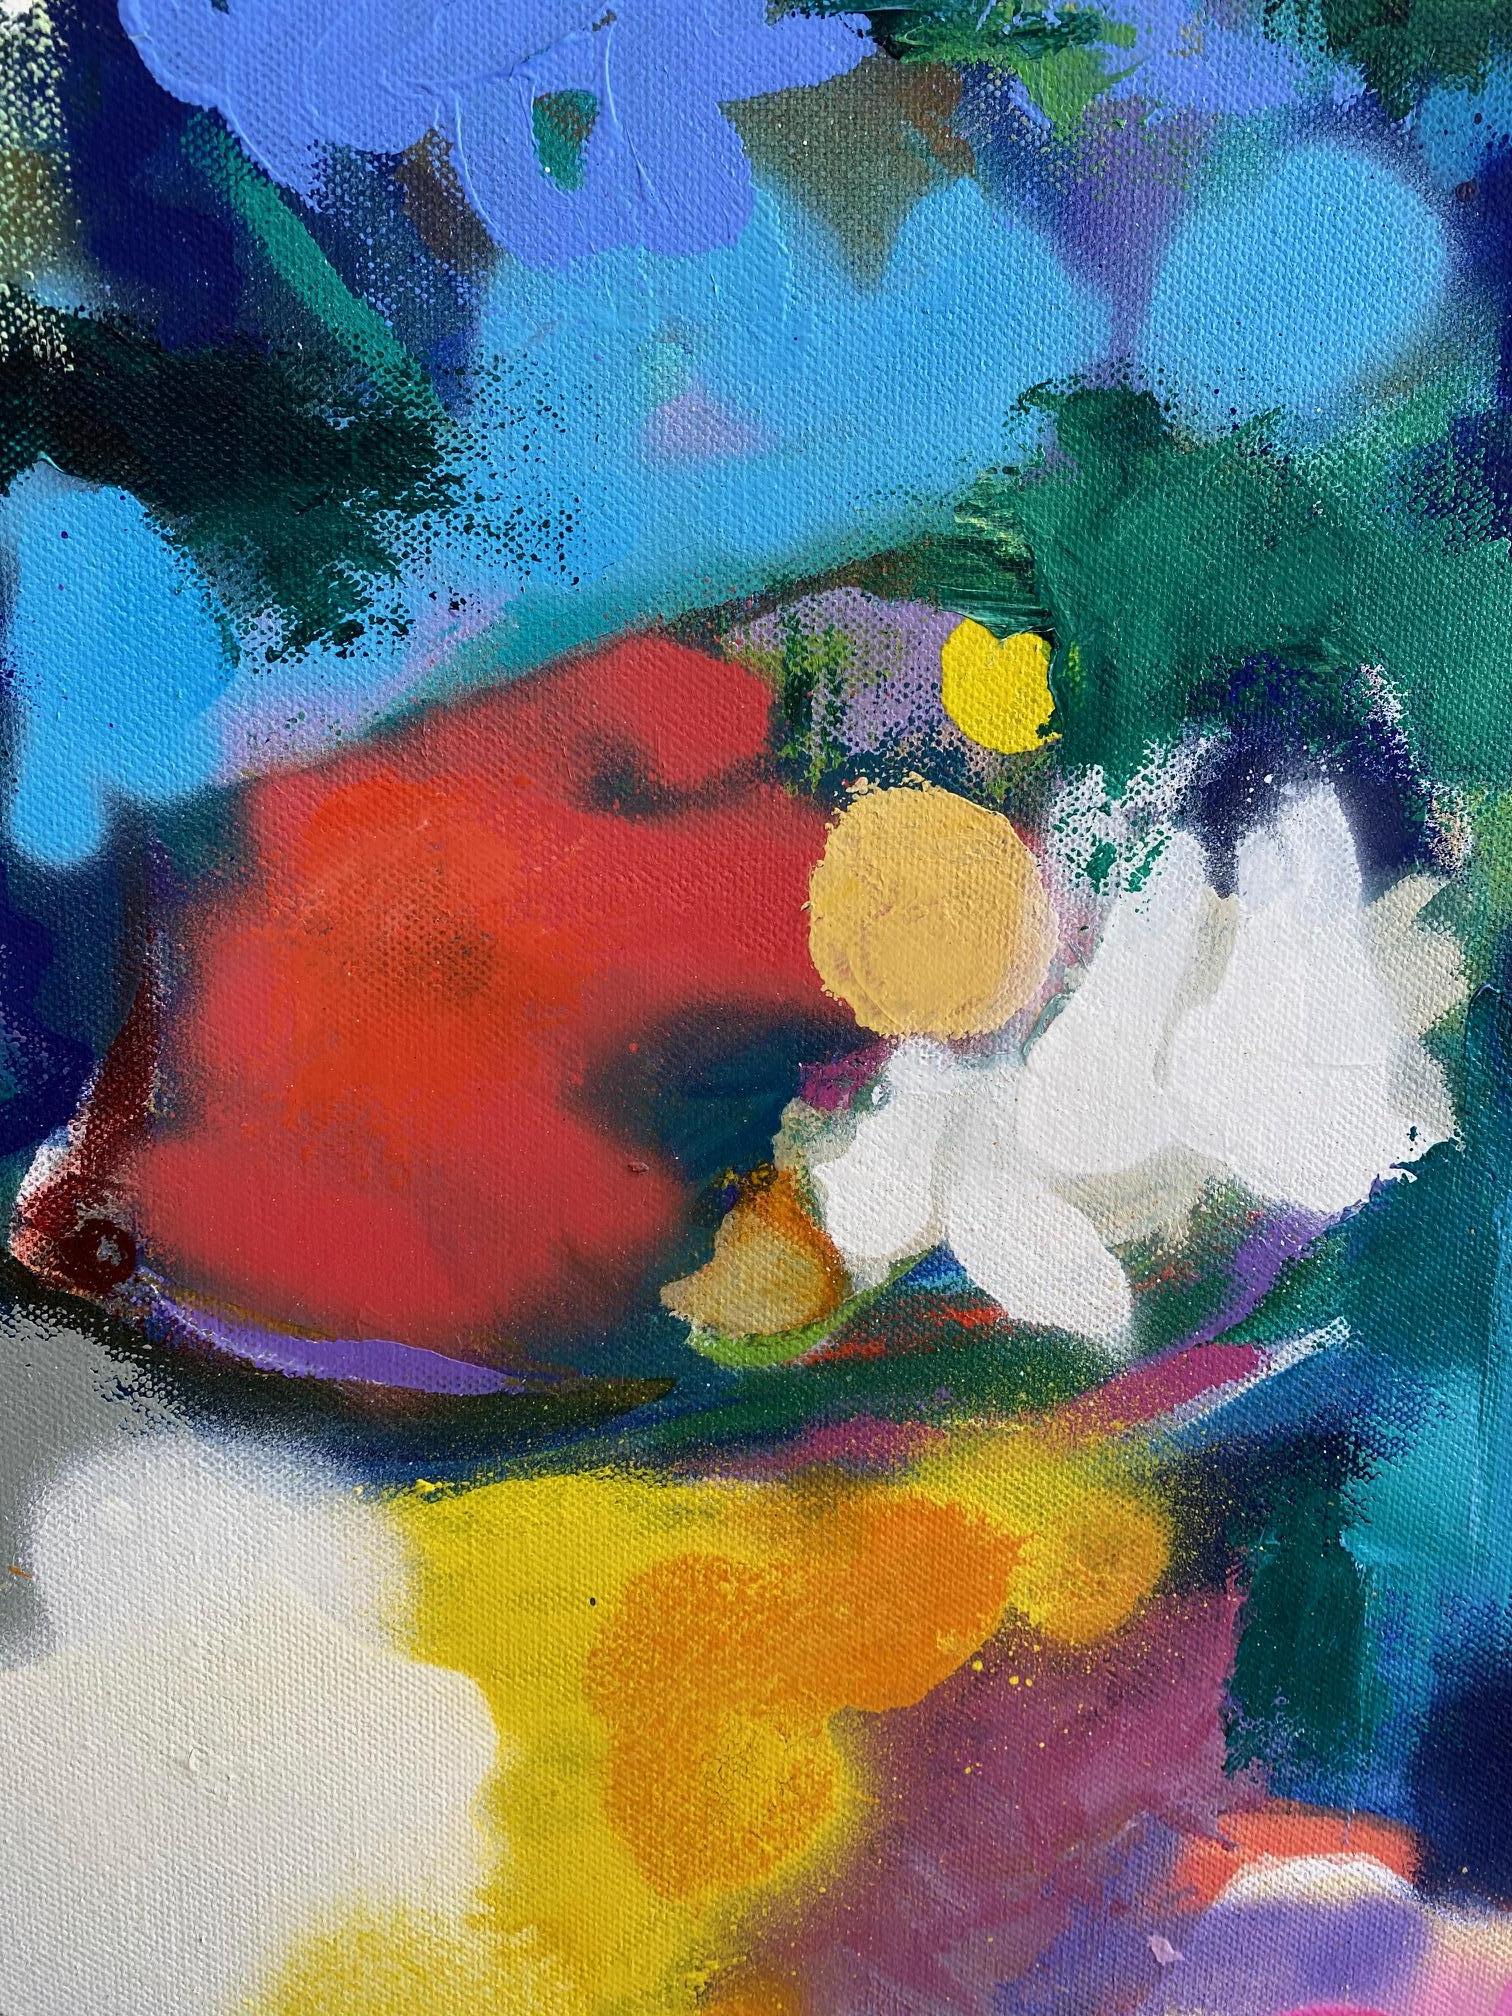 River Walk, original 36x36 abstract expressionist landscape - Abstract Expressionist Painting by Carol Carpenter